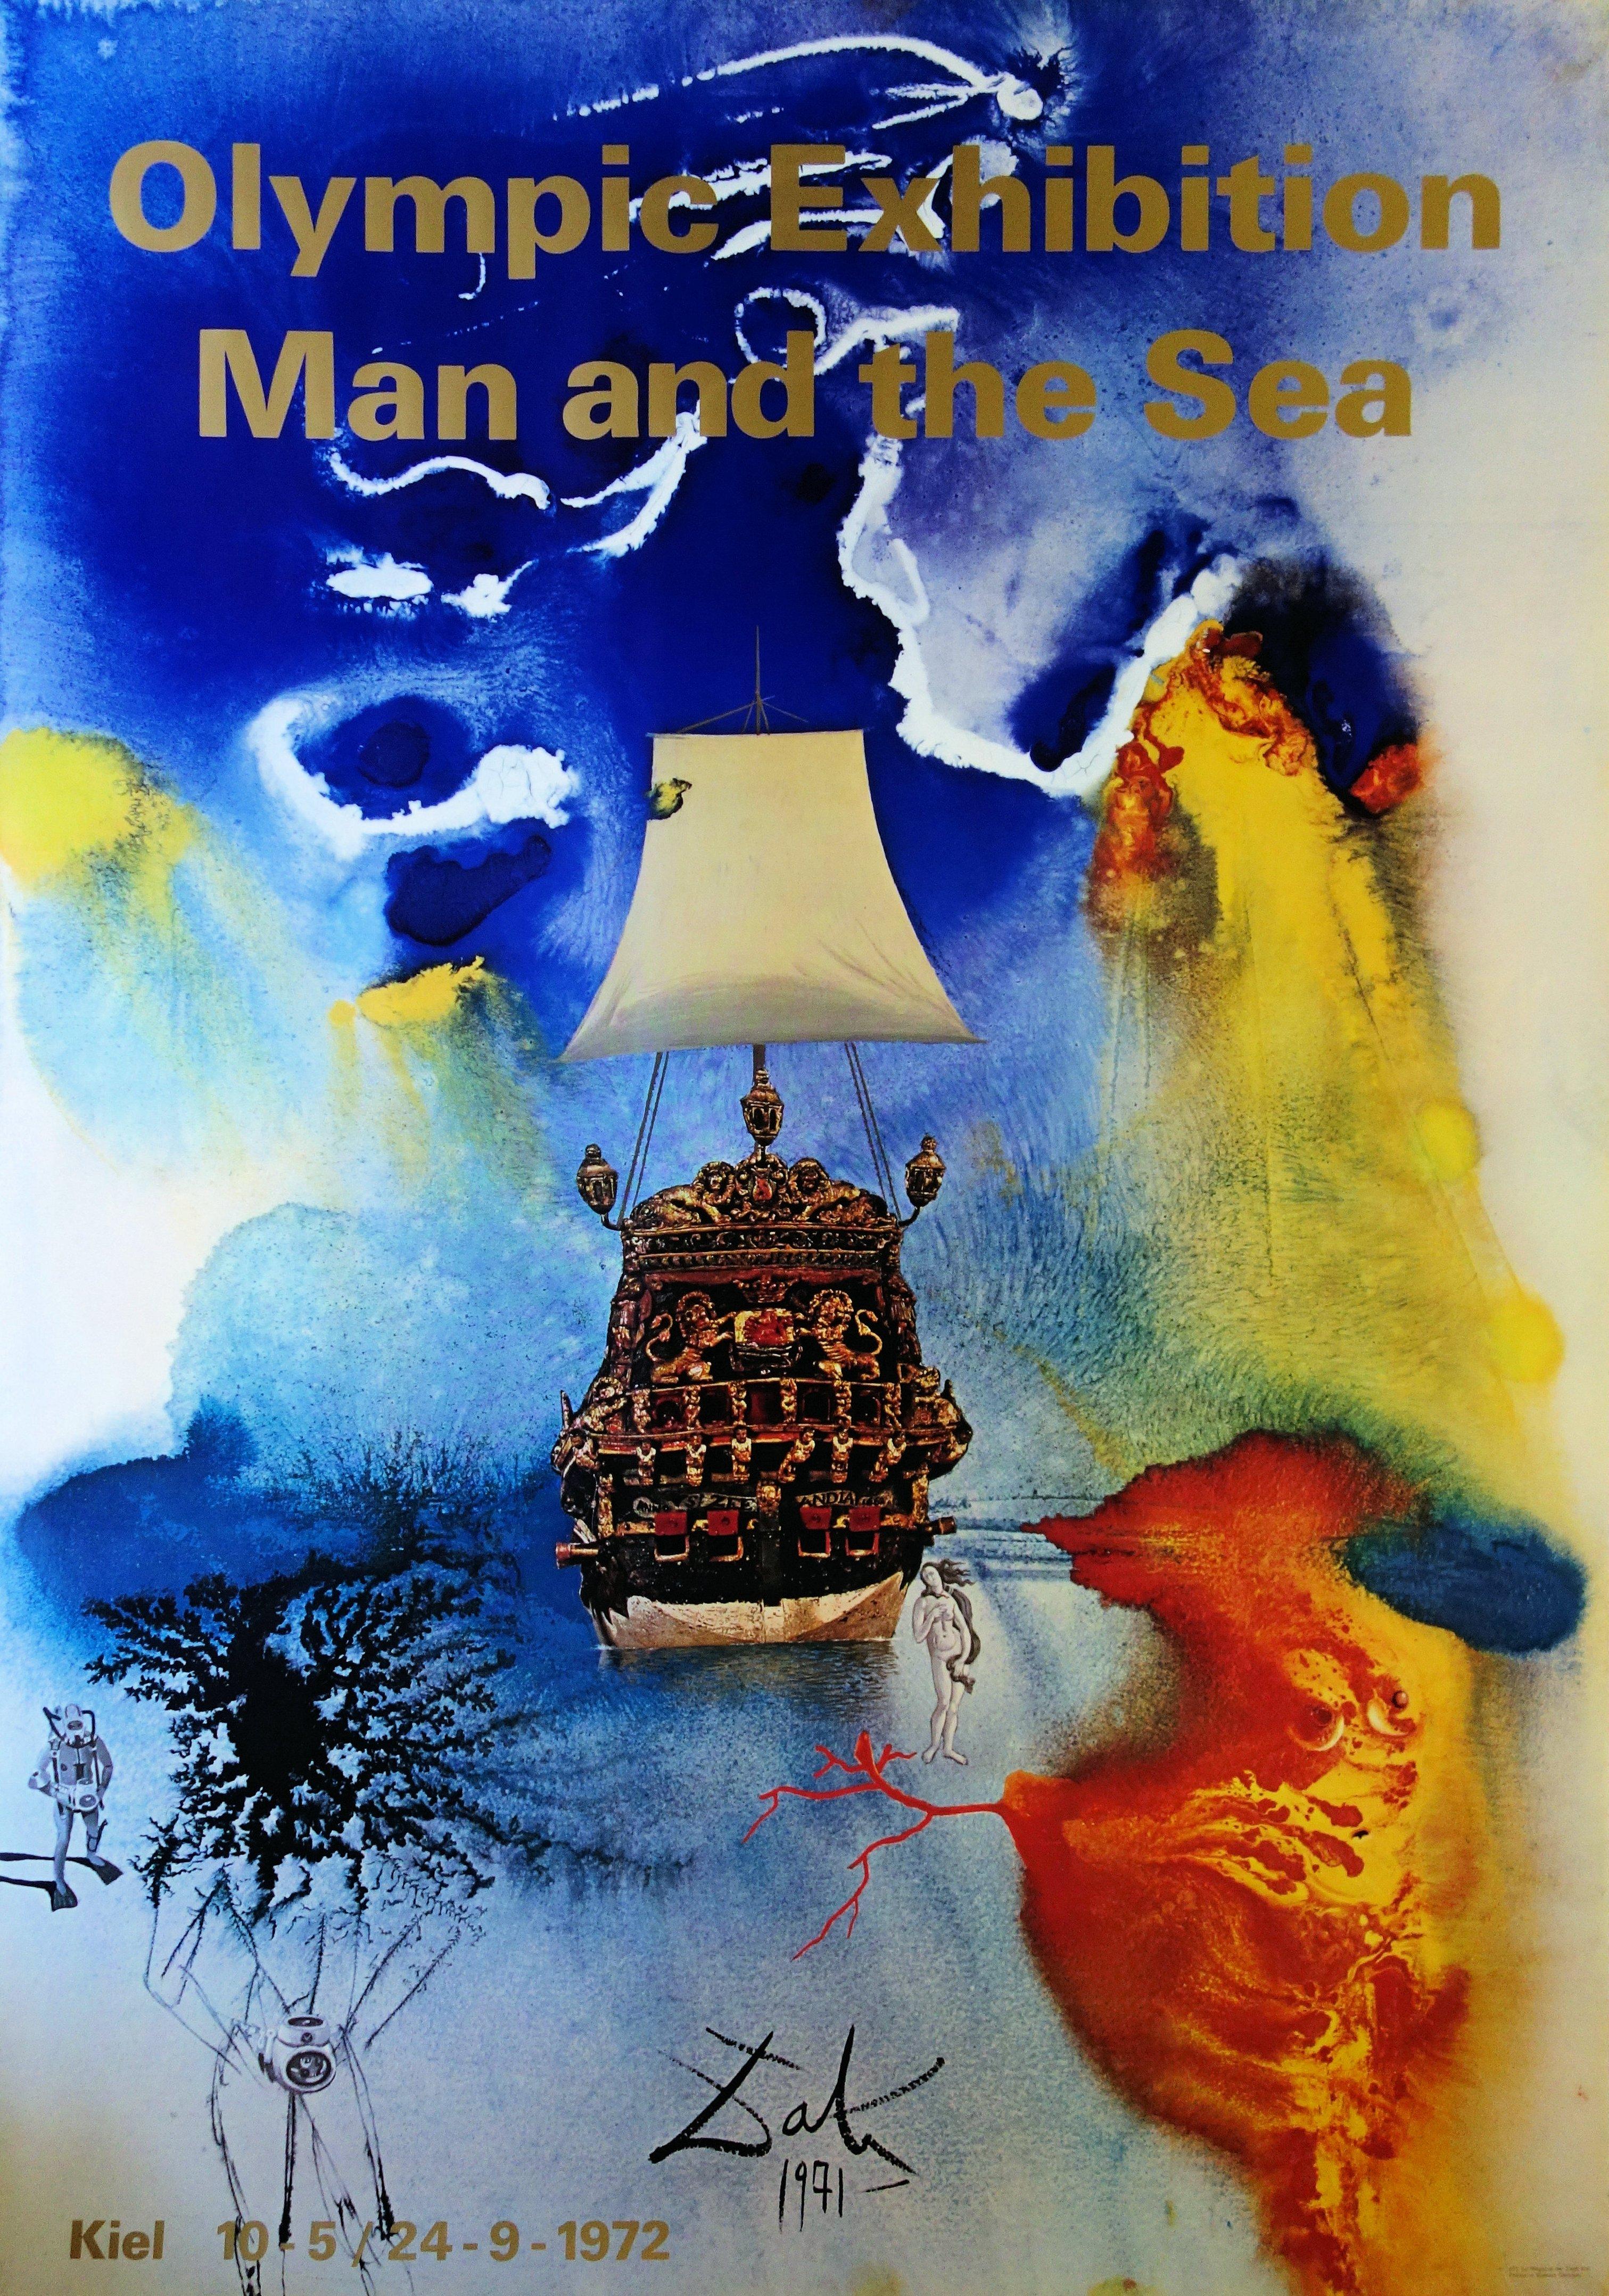 (after) Salvador Dali Figurative Print - Man and Sea - Vintage exhibition poster - 1972